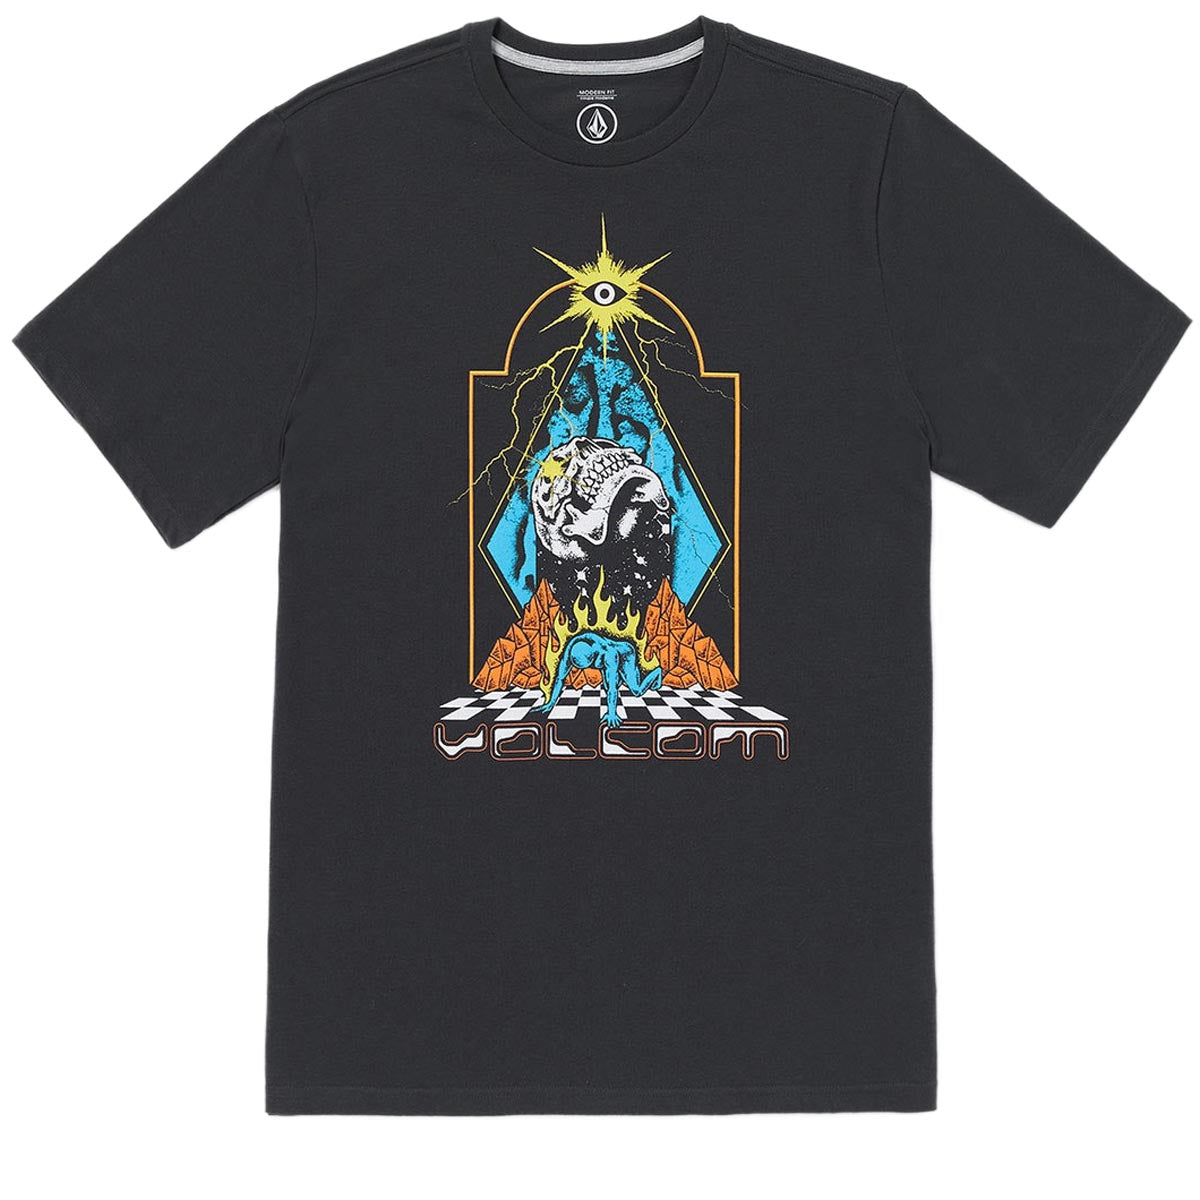 Volcom Star Scream T-Shirt - Washed Black Heather image 1